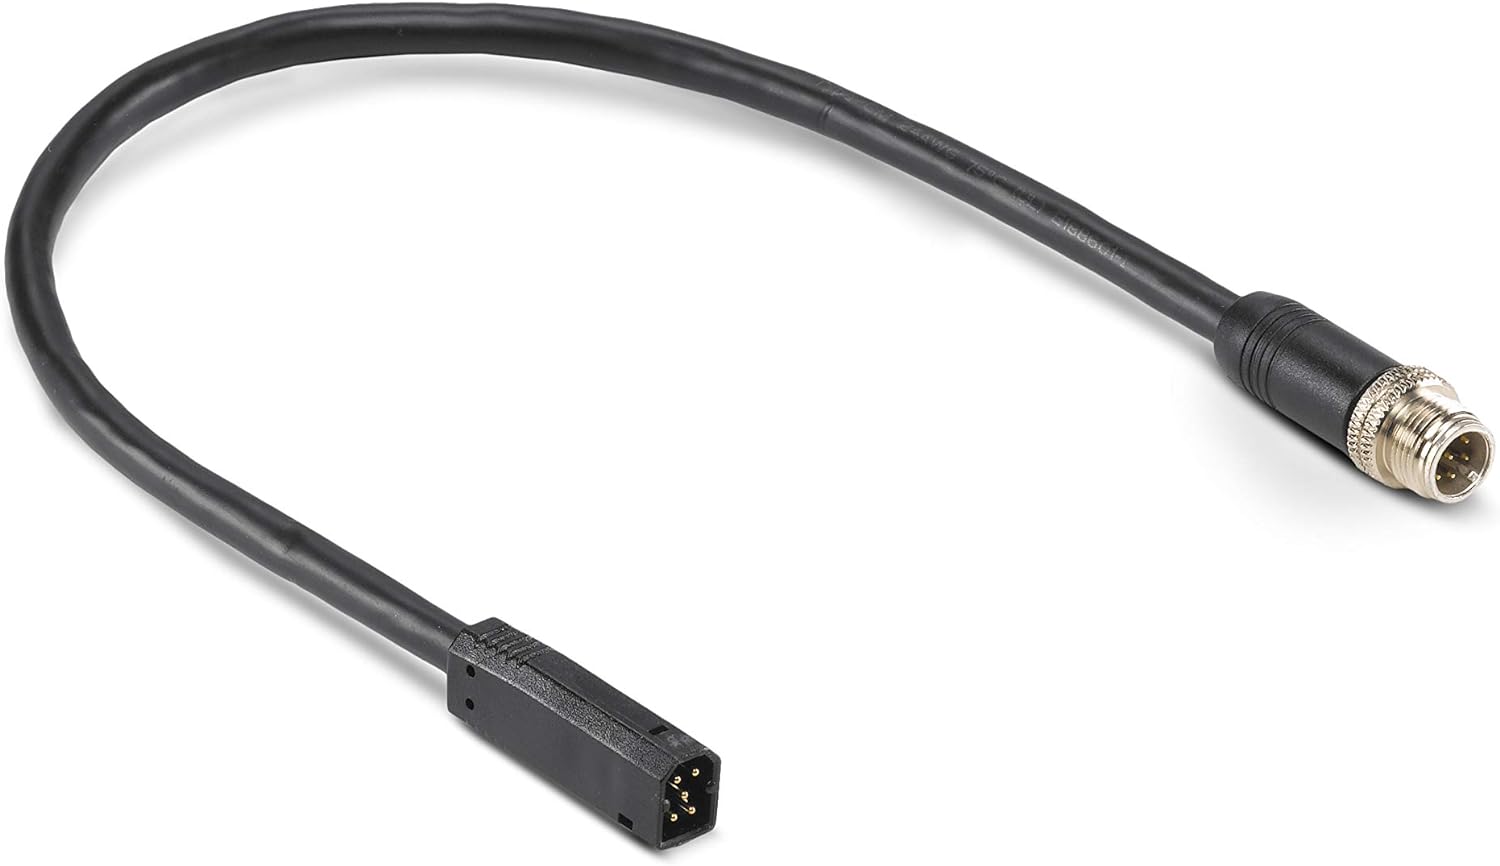 Humminbird 720074-1 AS EC QDM 700 Series Ethernet Adapter Cable - Humminbird Ethernet Adapter Cable Review